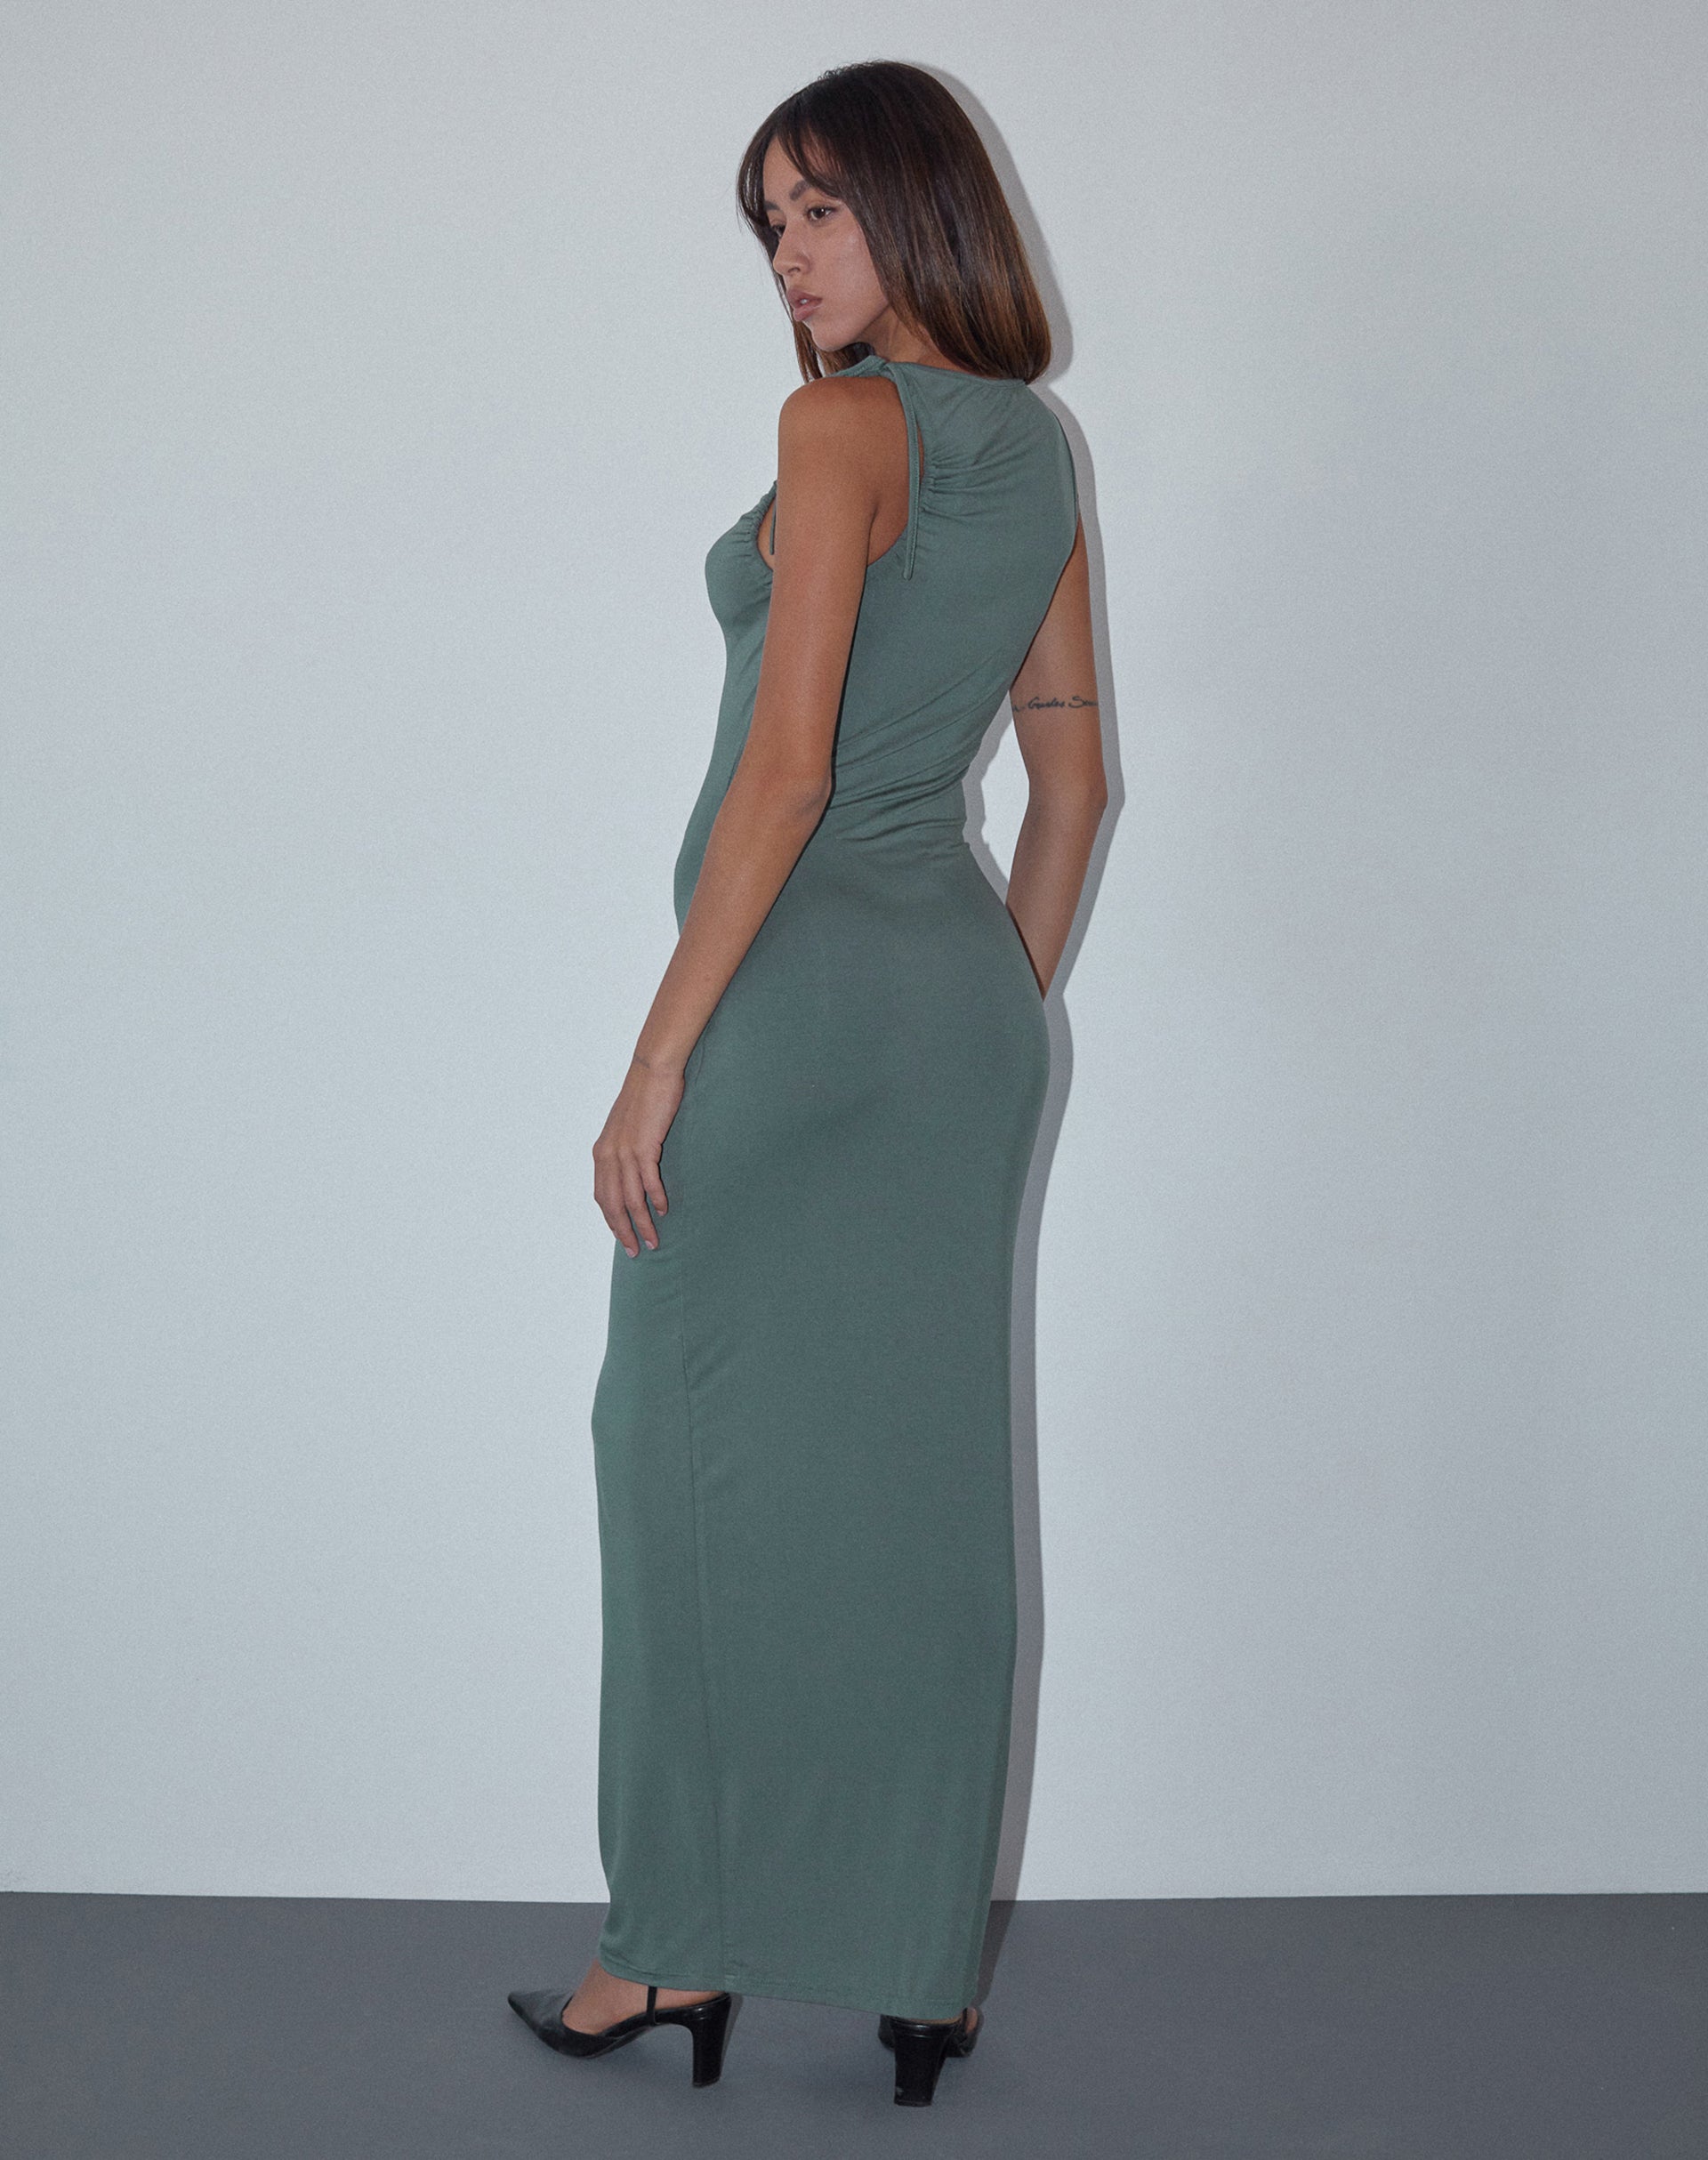 Image of Elinor Maxi Dress in Slinky Olive